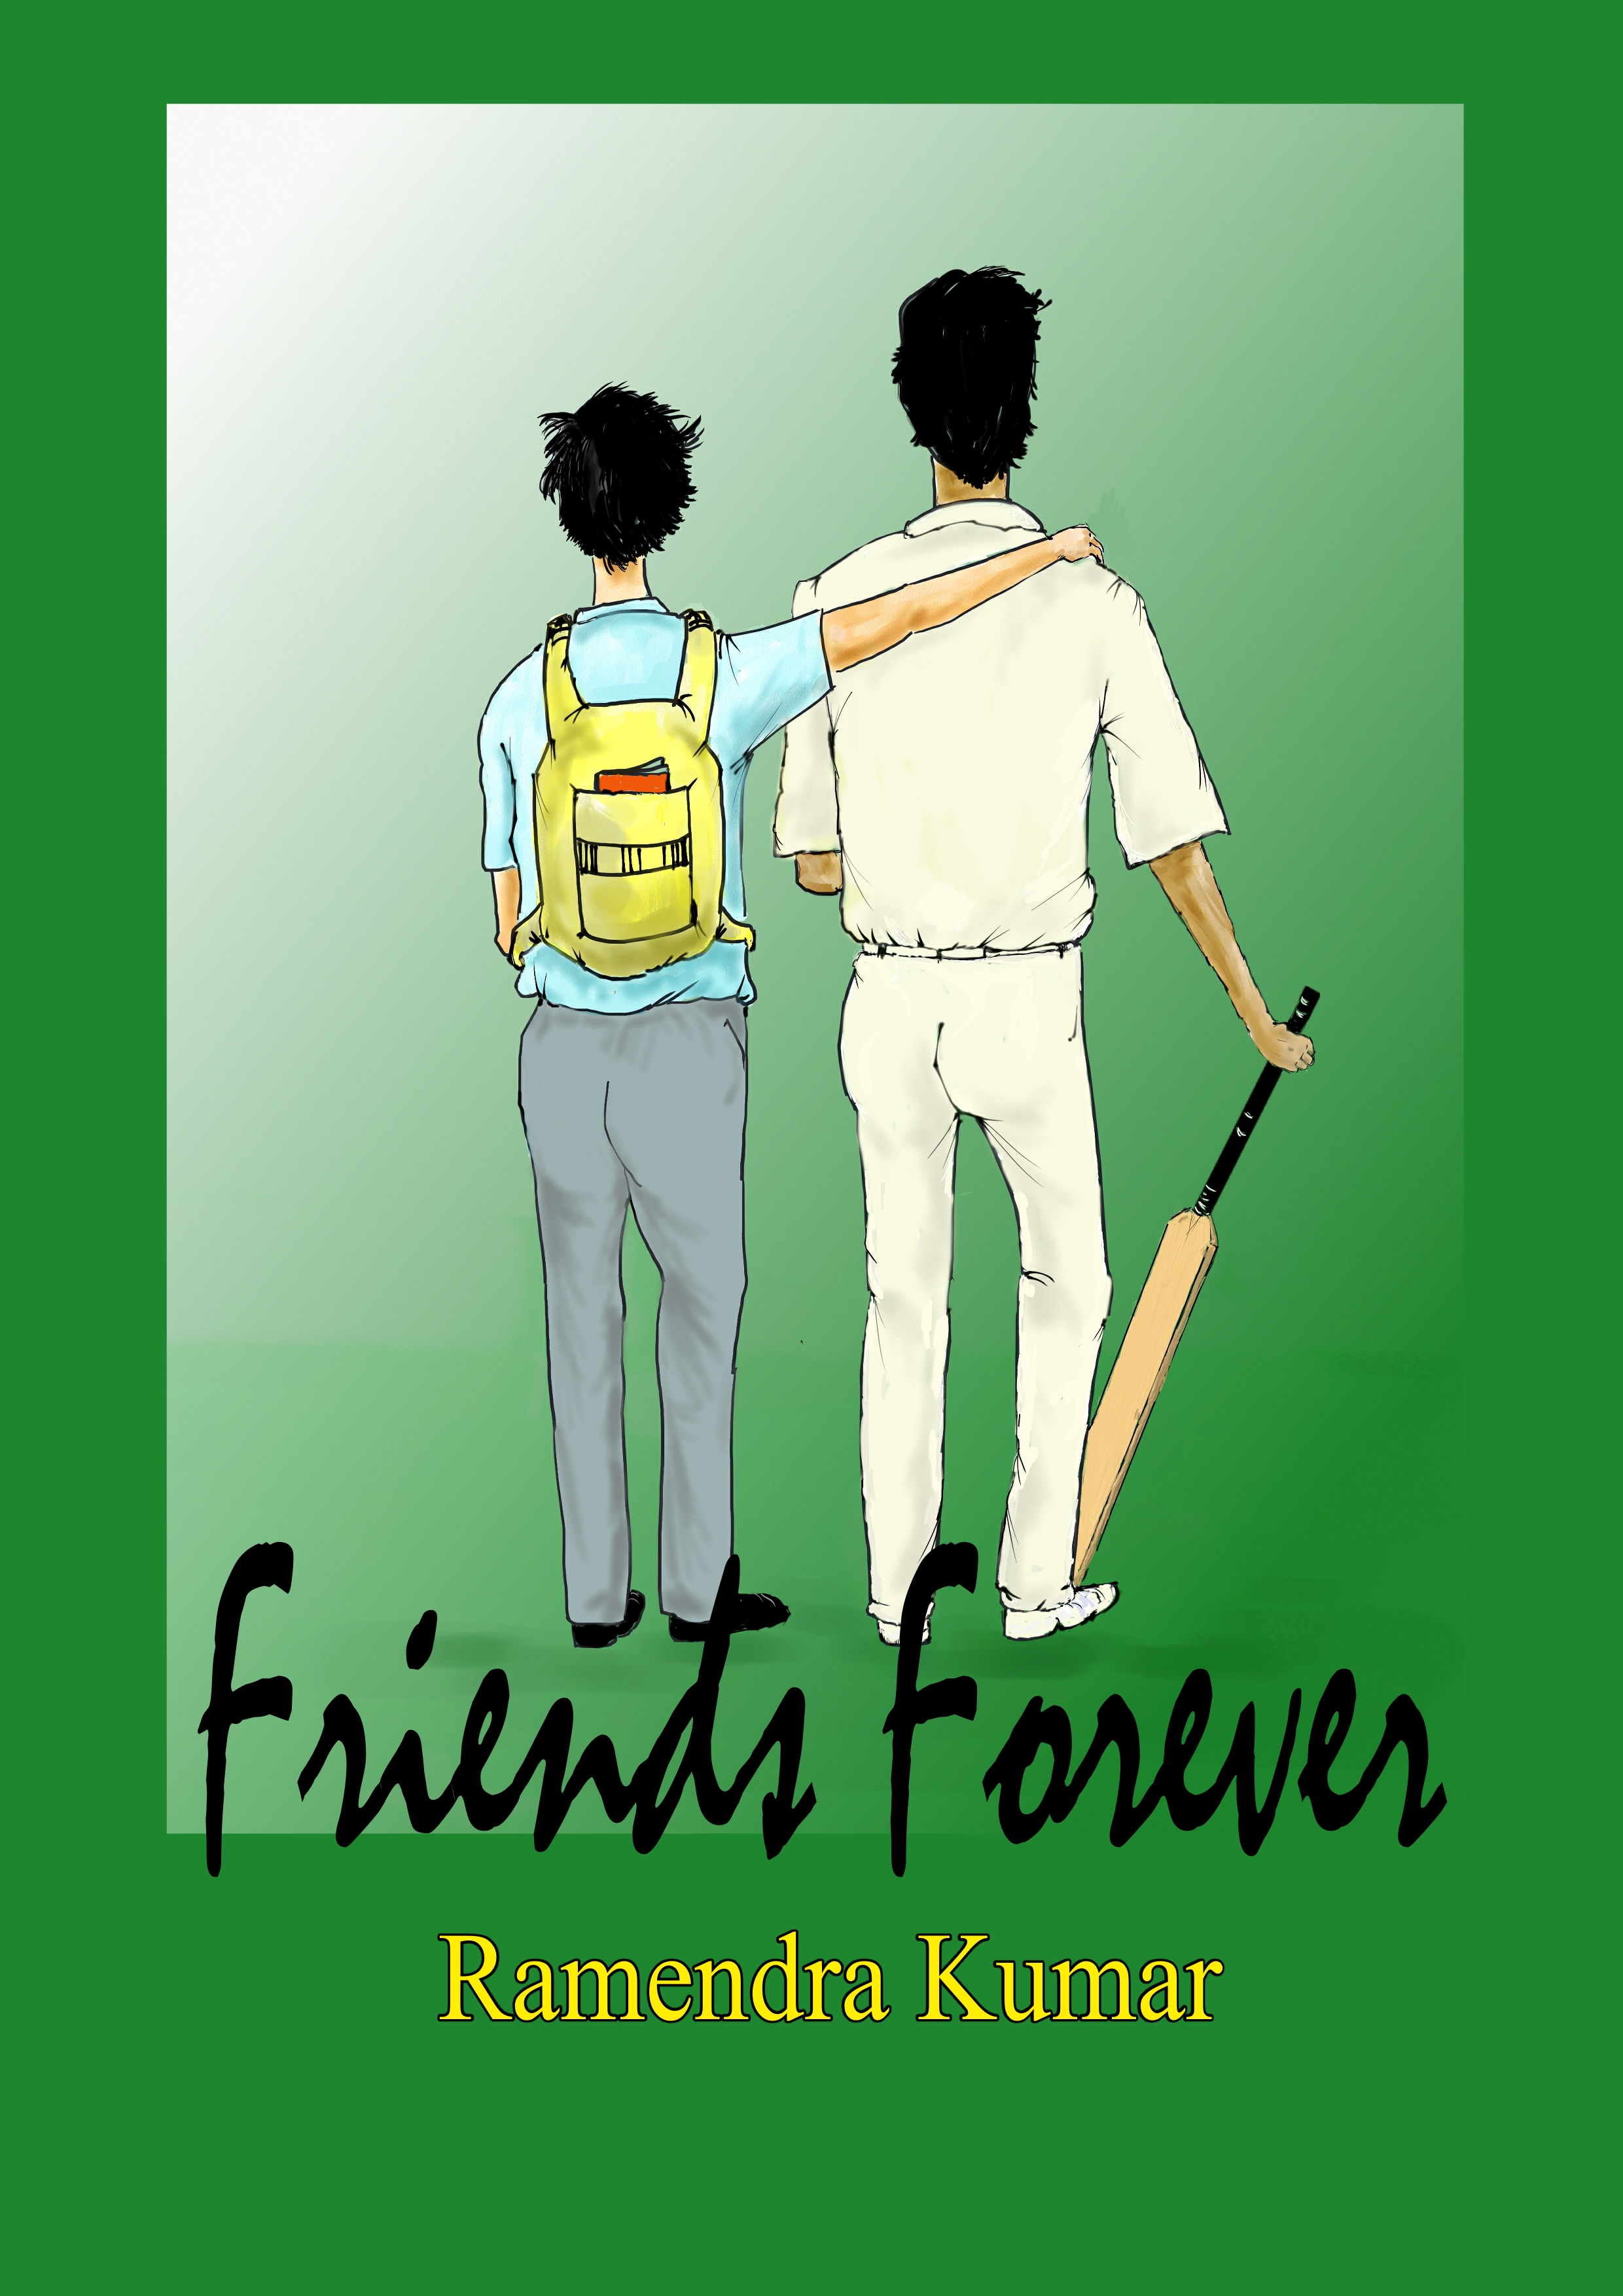 Friends Forever by Ramendra Kumar